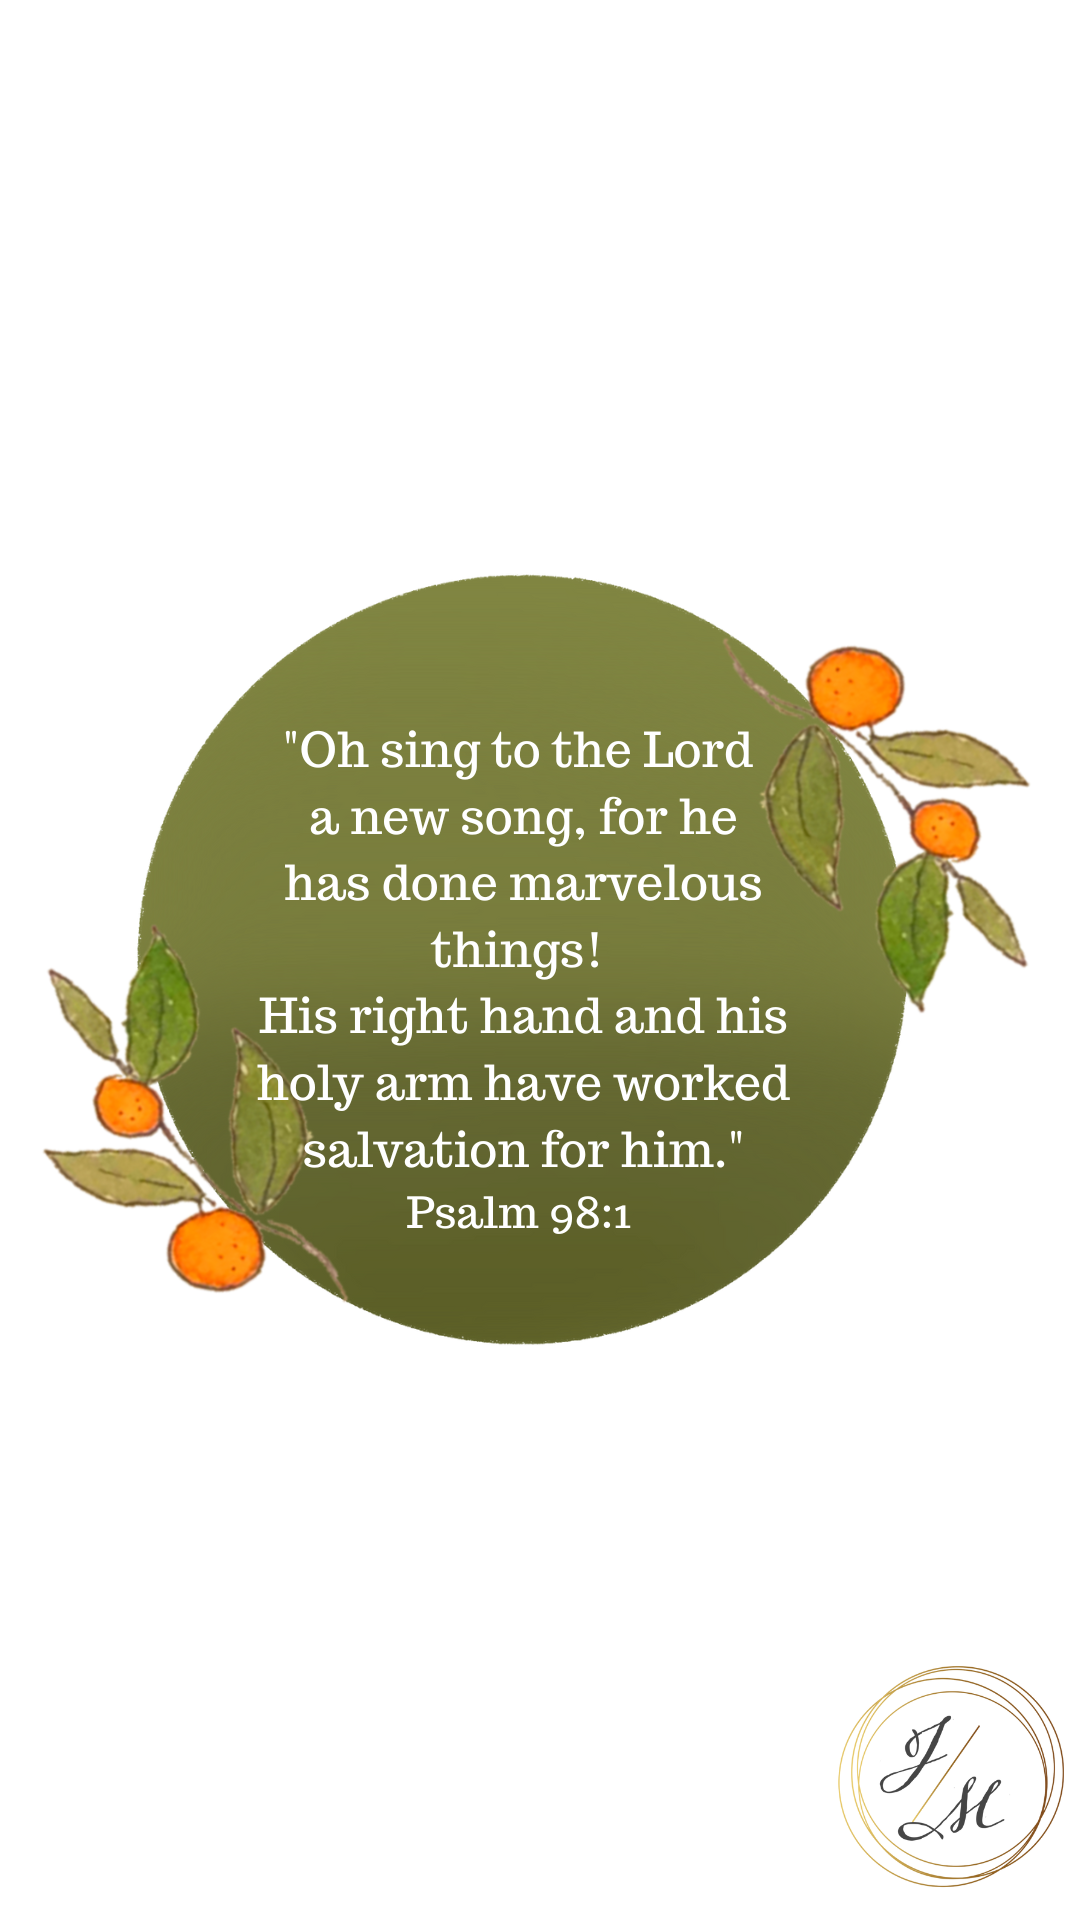 Psalm 98:1